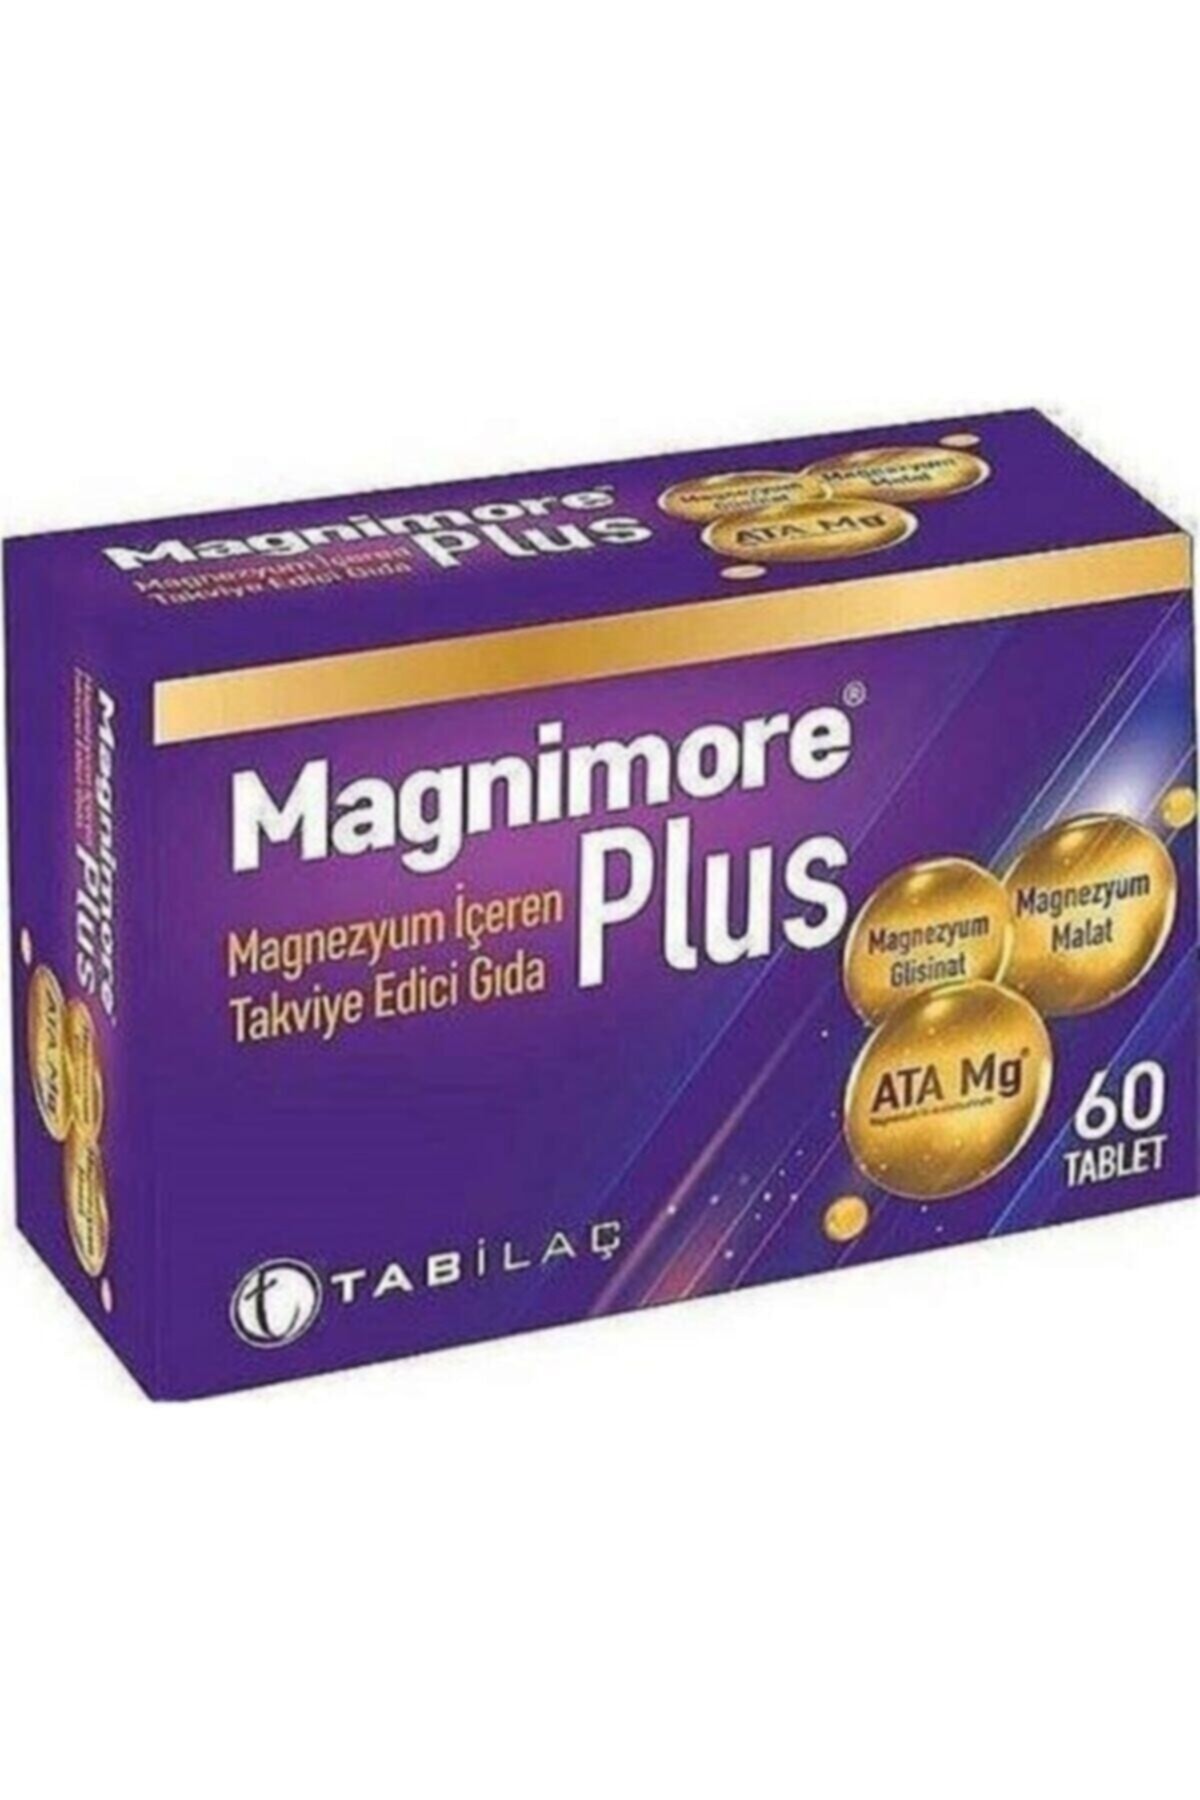 Magnimore Plus 60 Tablets